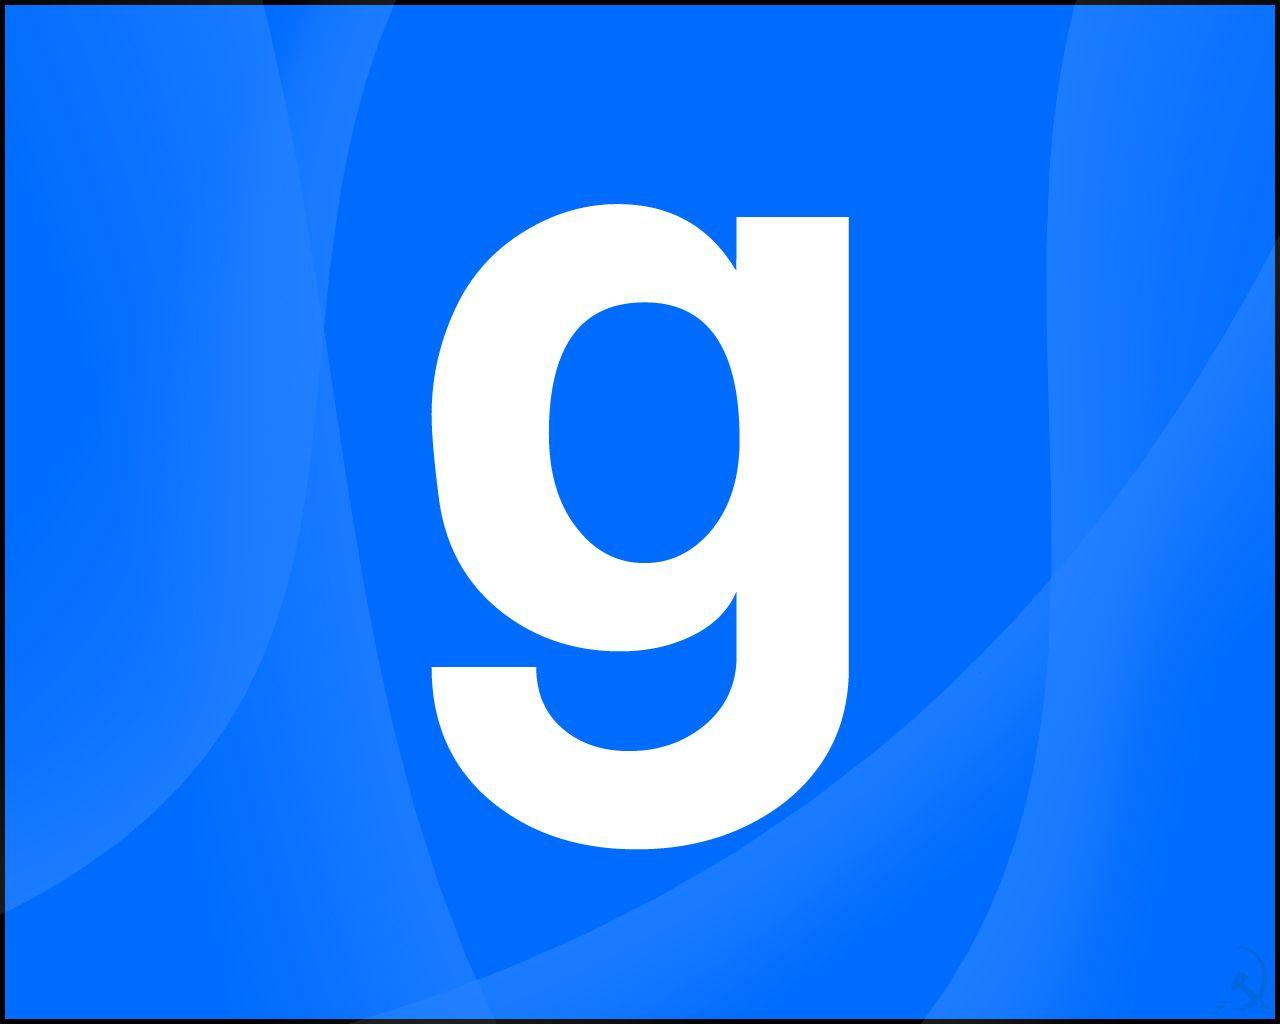 Gmod Logo Wallpapers